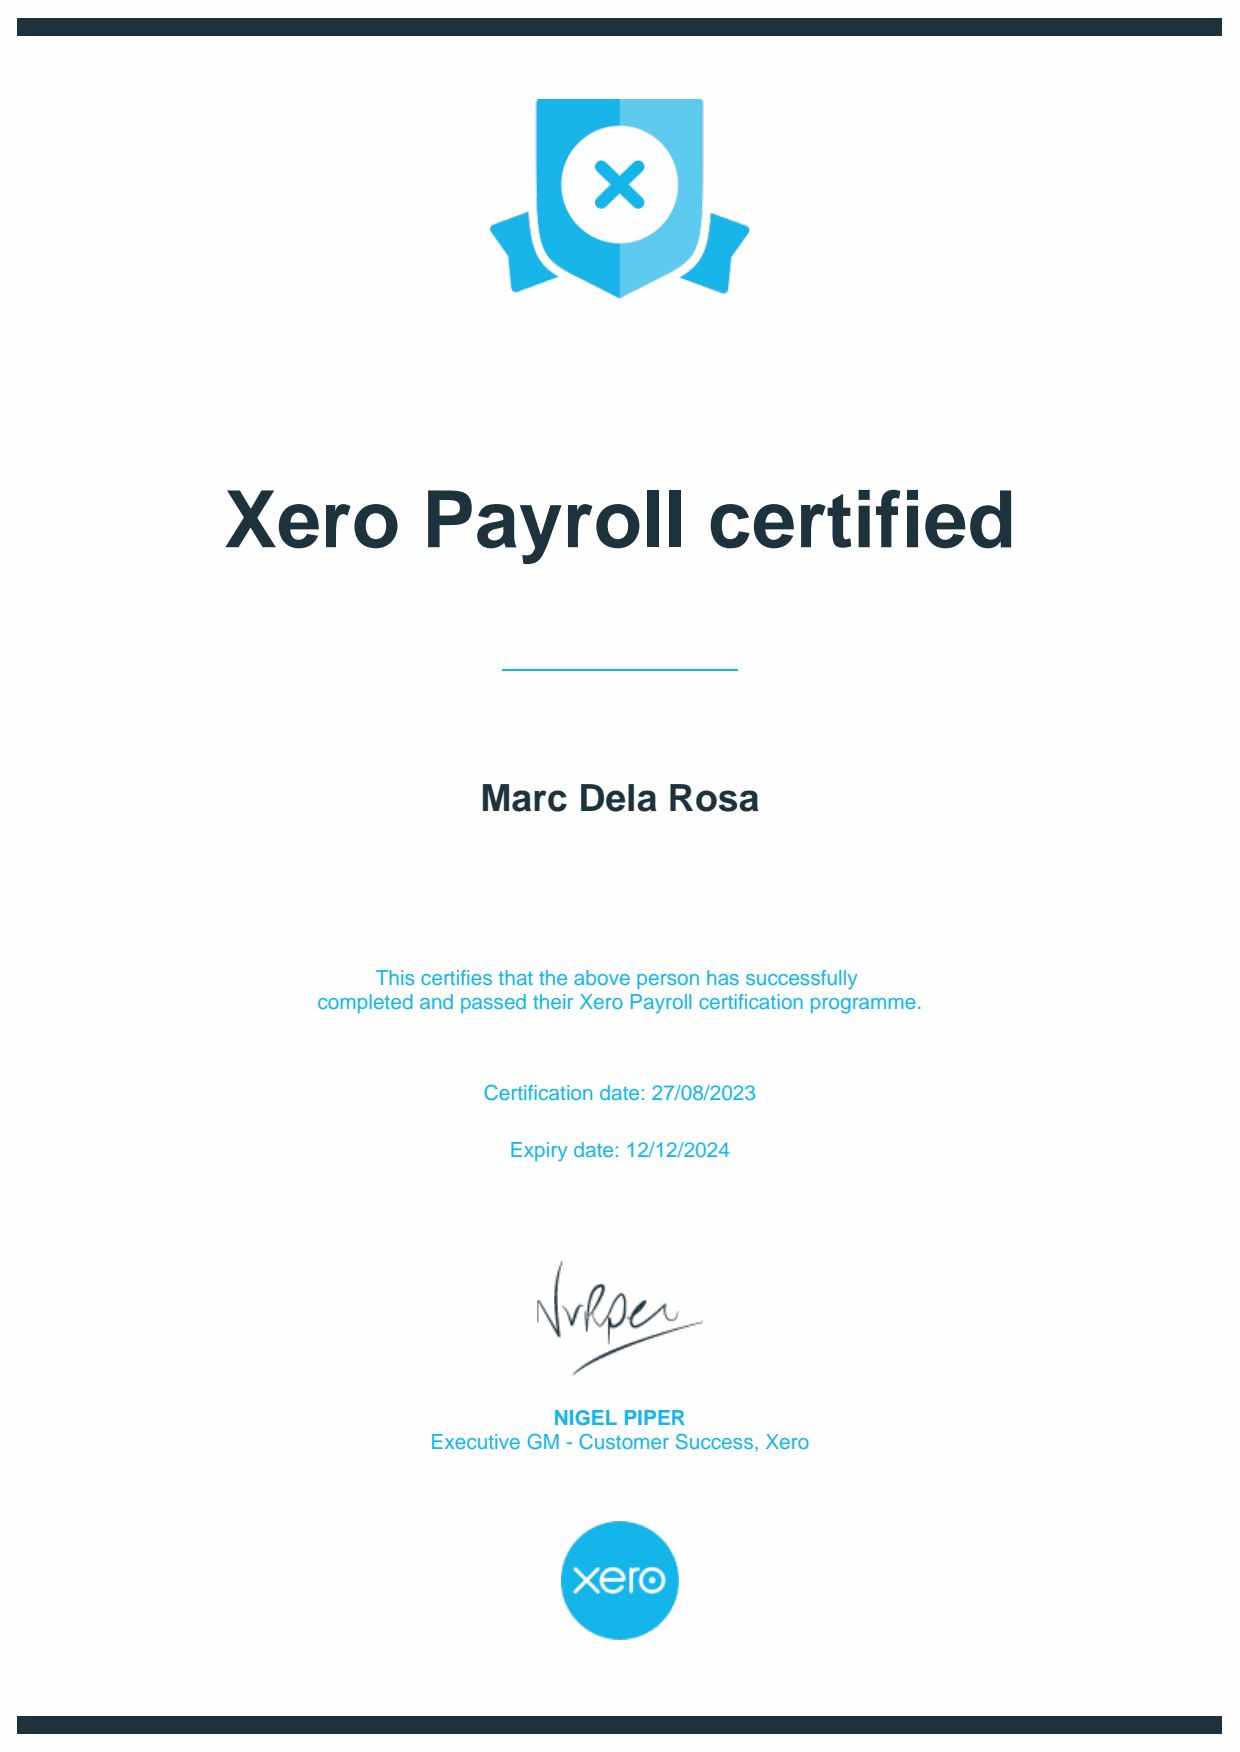 Xero Payroll Certificate